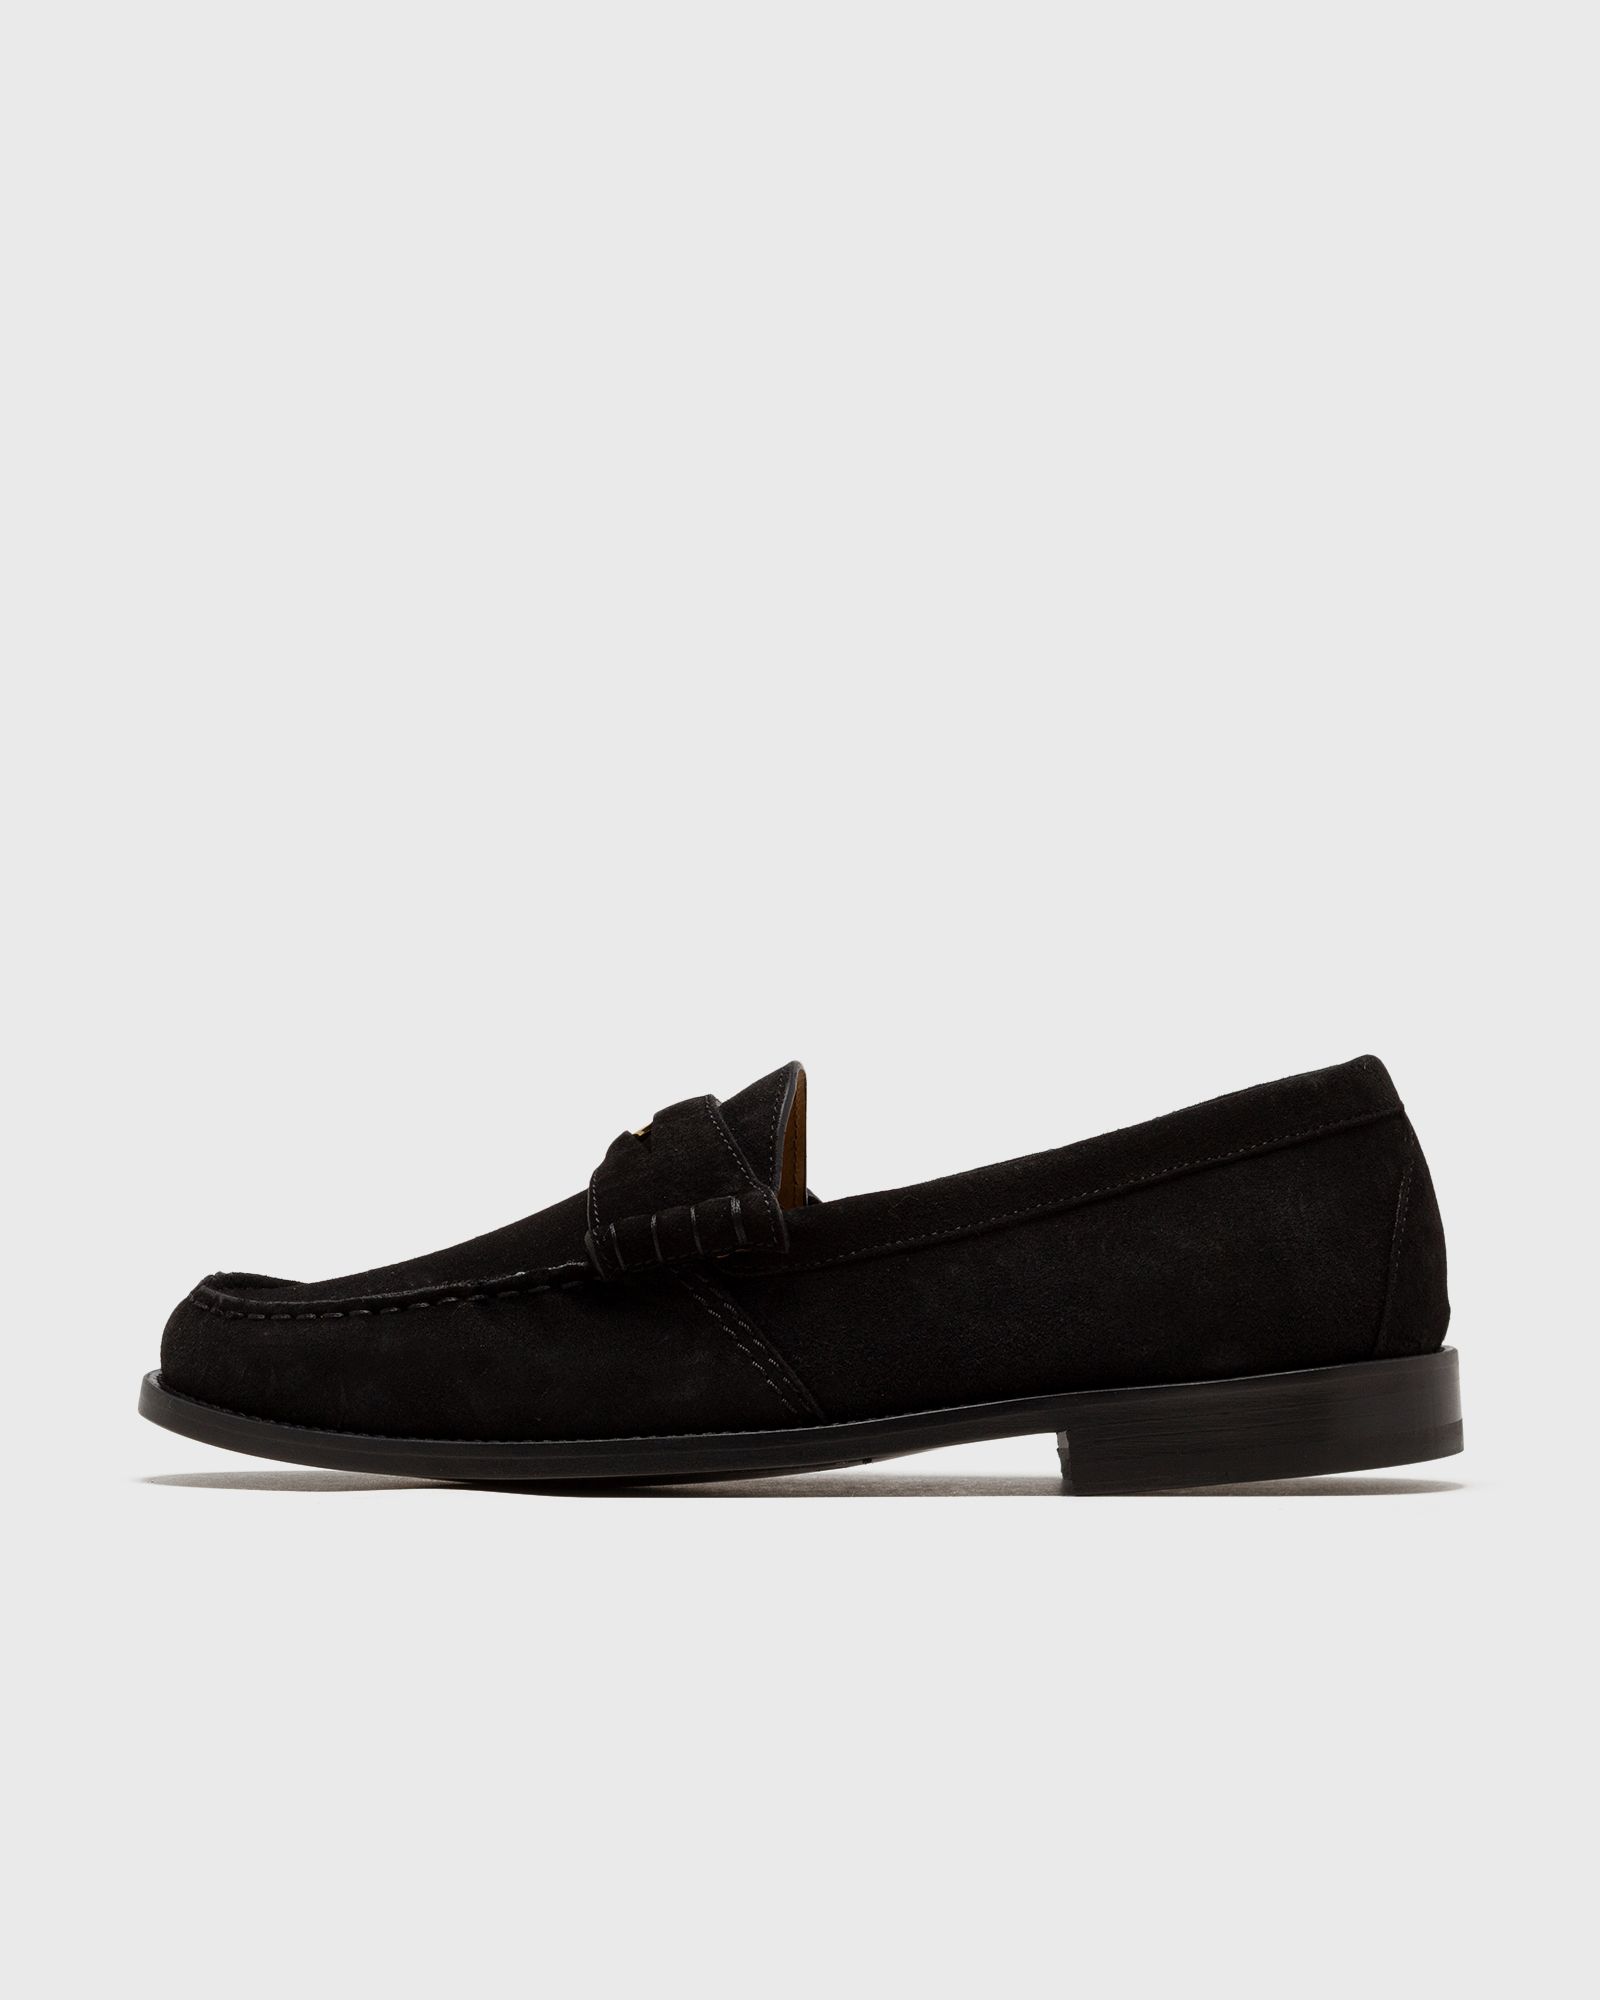 Rhude - penny loafer suede men casual shoes black in größe:42